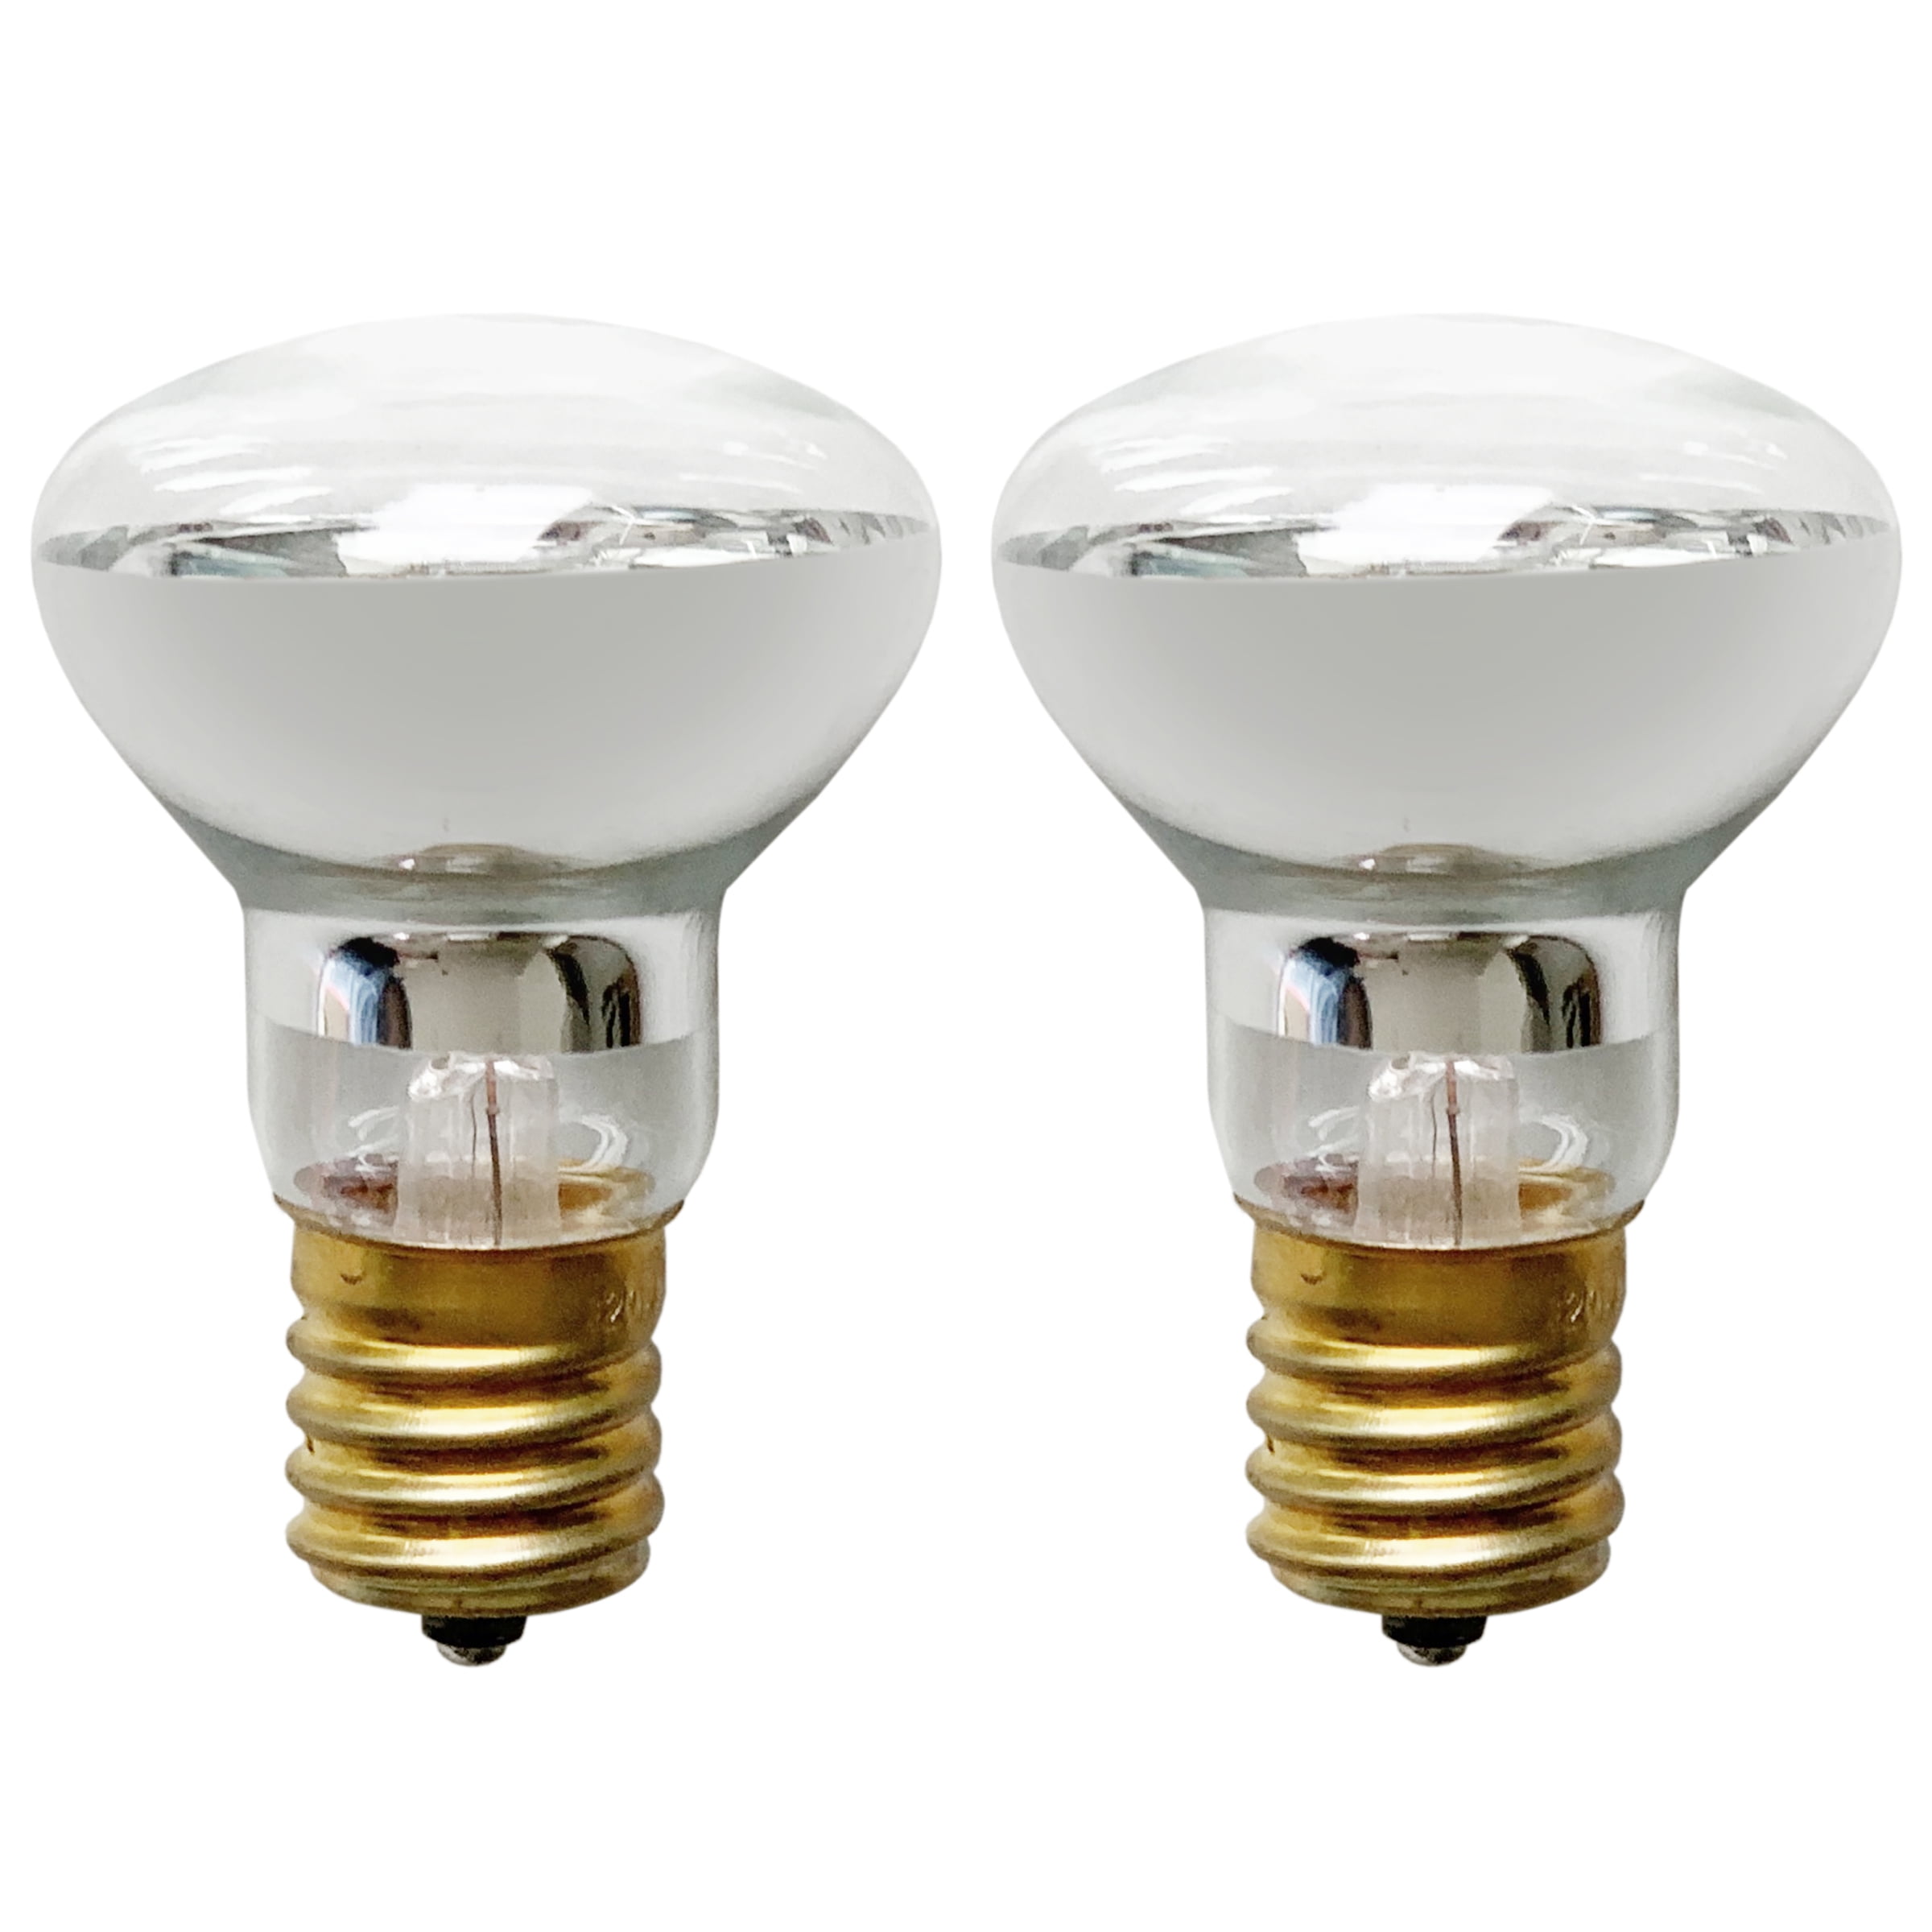 Refrigerator light bulb replacement : r/Appliances